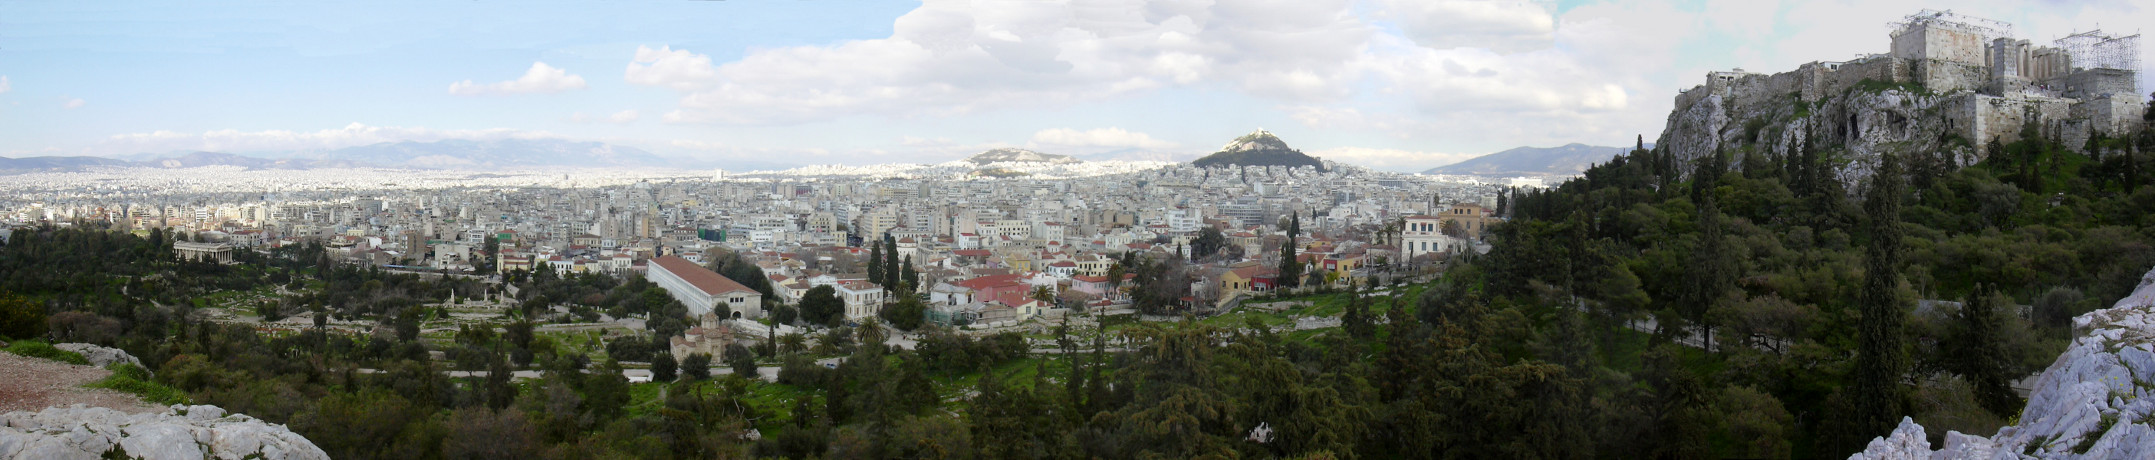 2005-athen-panorama-3.jpg